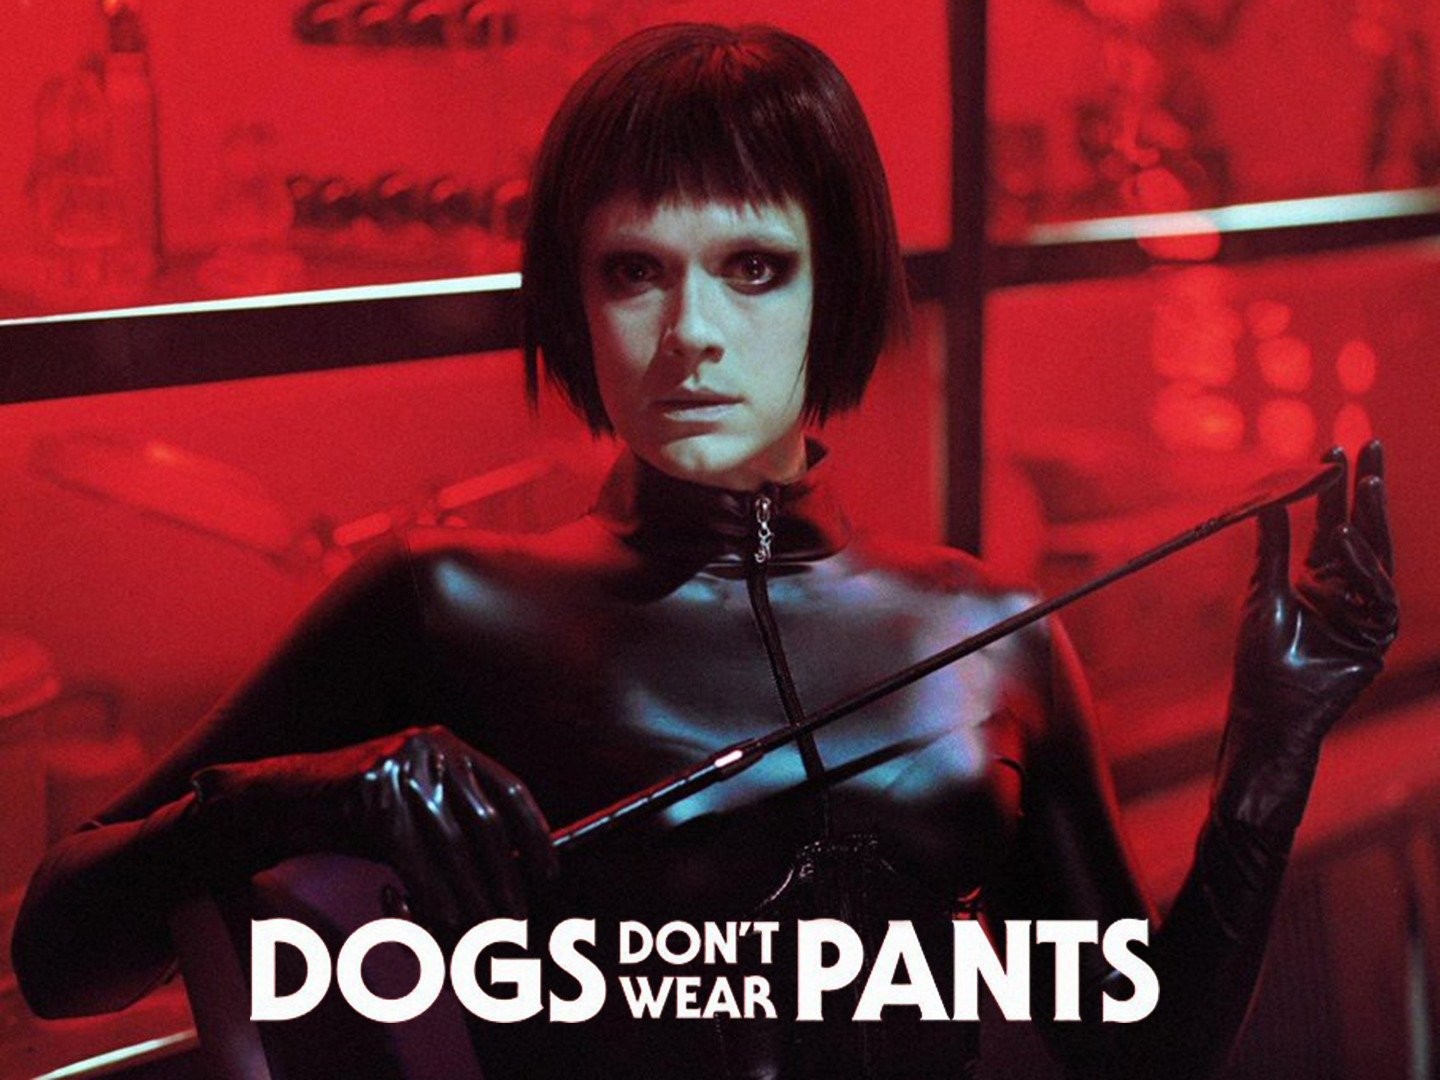 Dogs don't wear pants (finnish: Koirat eivät käytä housuja) movie poster /  key art design by Brosmark… | Pelis recomendadas, Afiche de pelicula,  Poster de peliculas